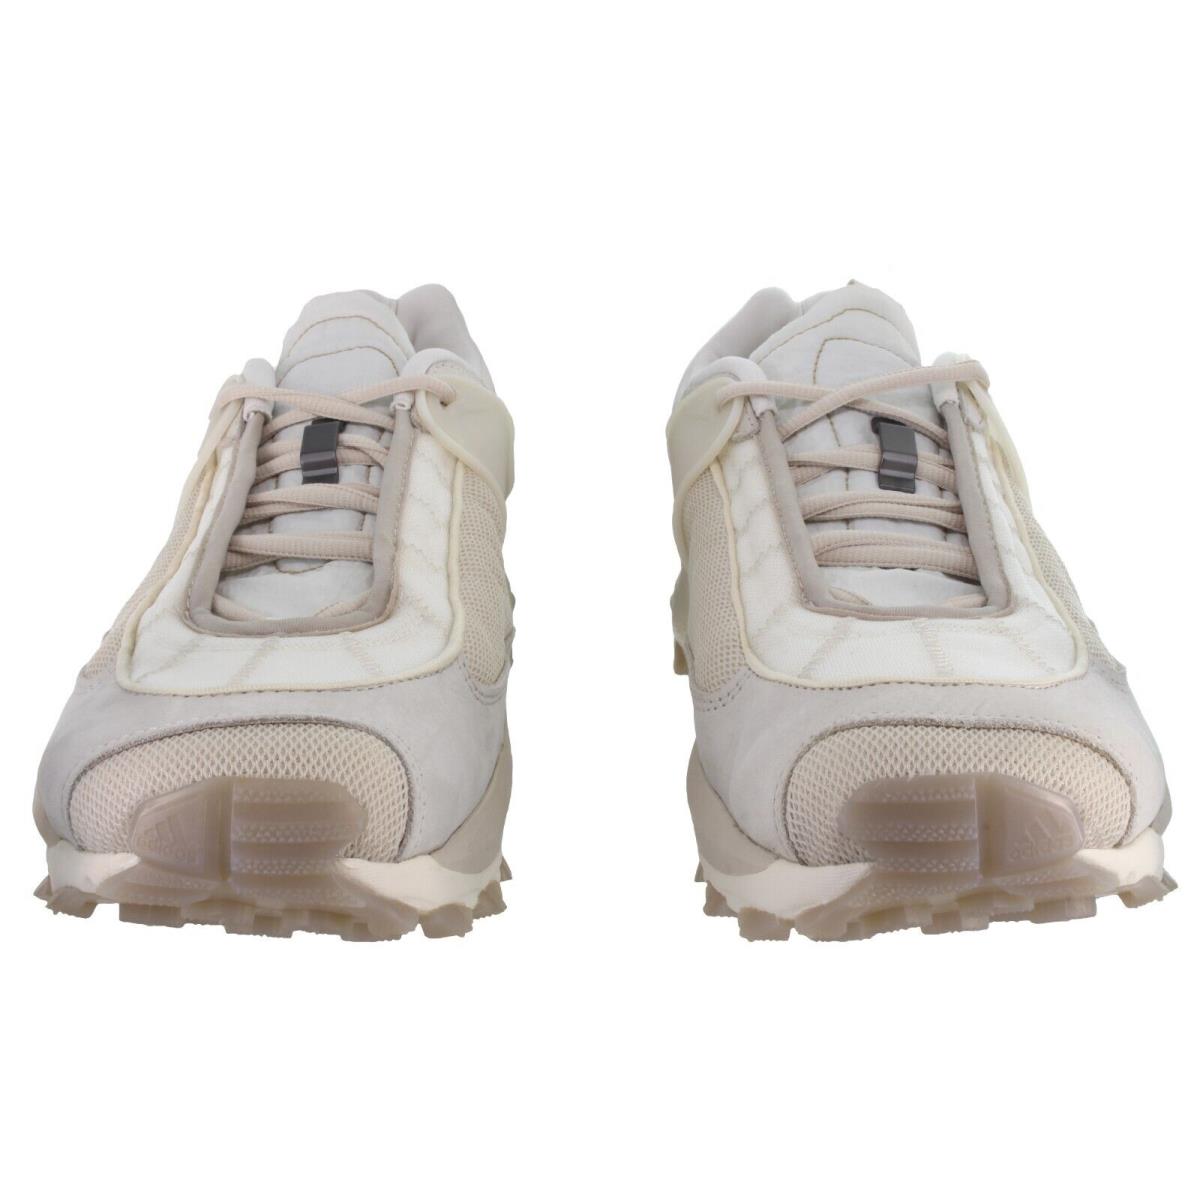 Adidas shoes  - Off White, Tan, Supplier Colour 1